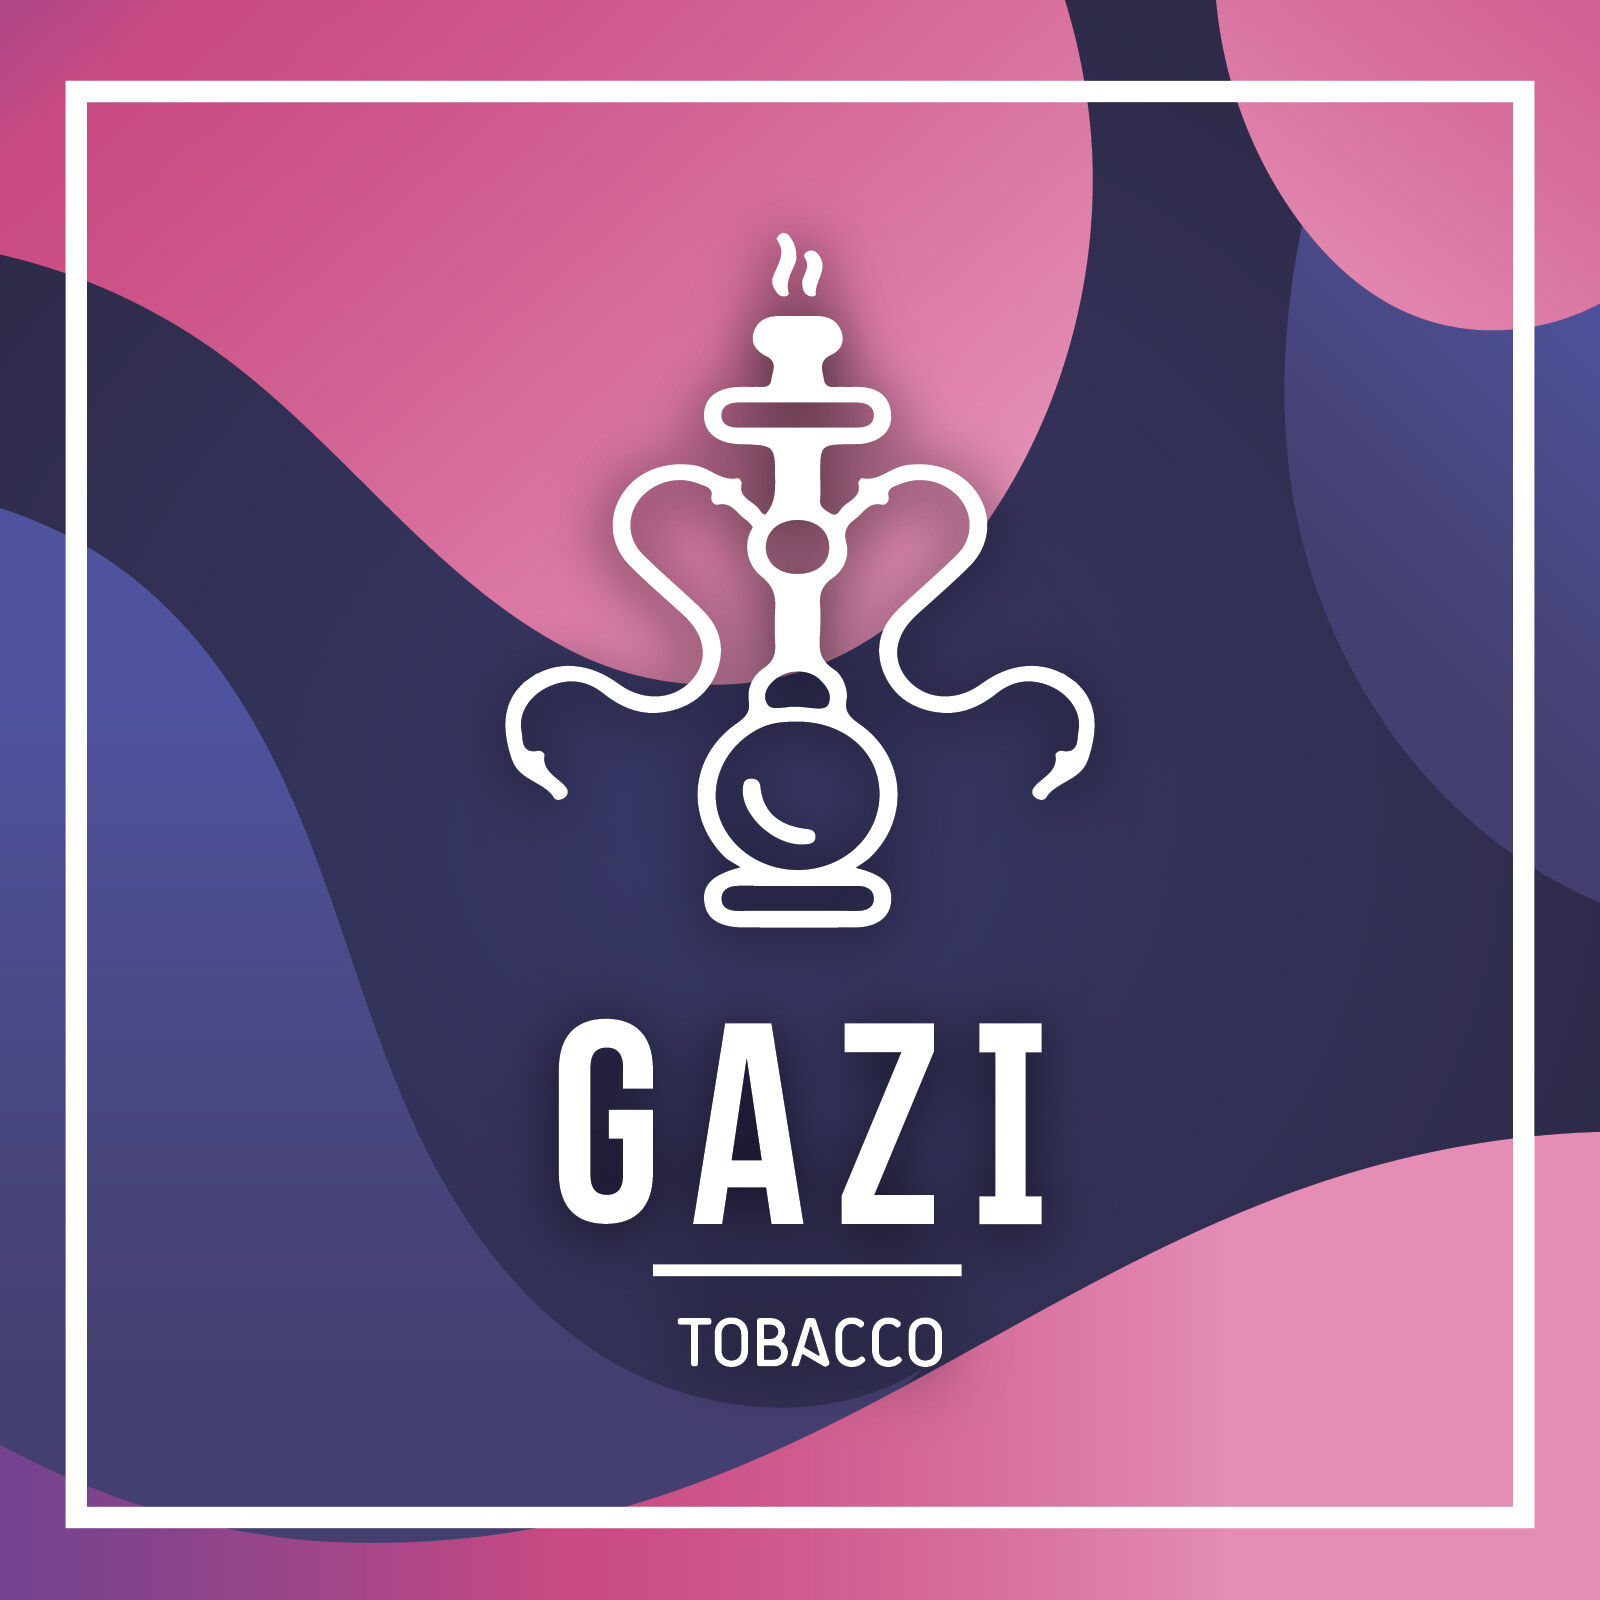 Gazi Tobacco 25g Gazola